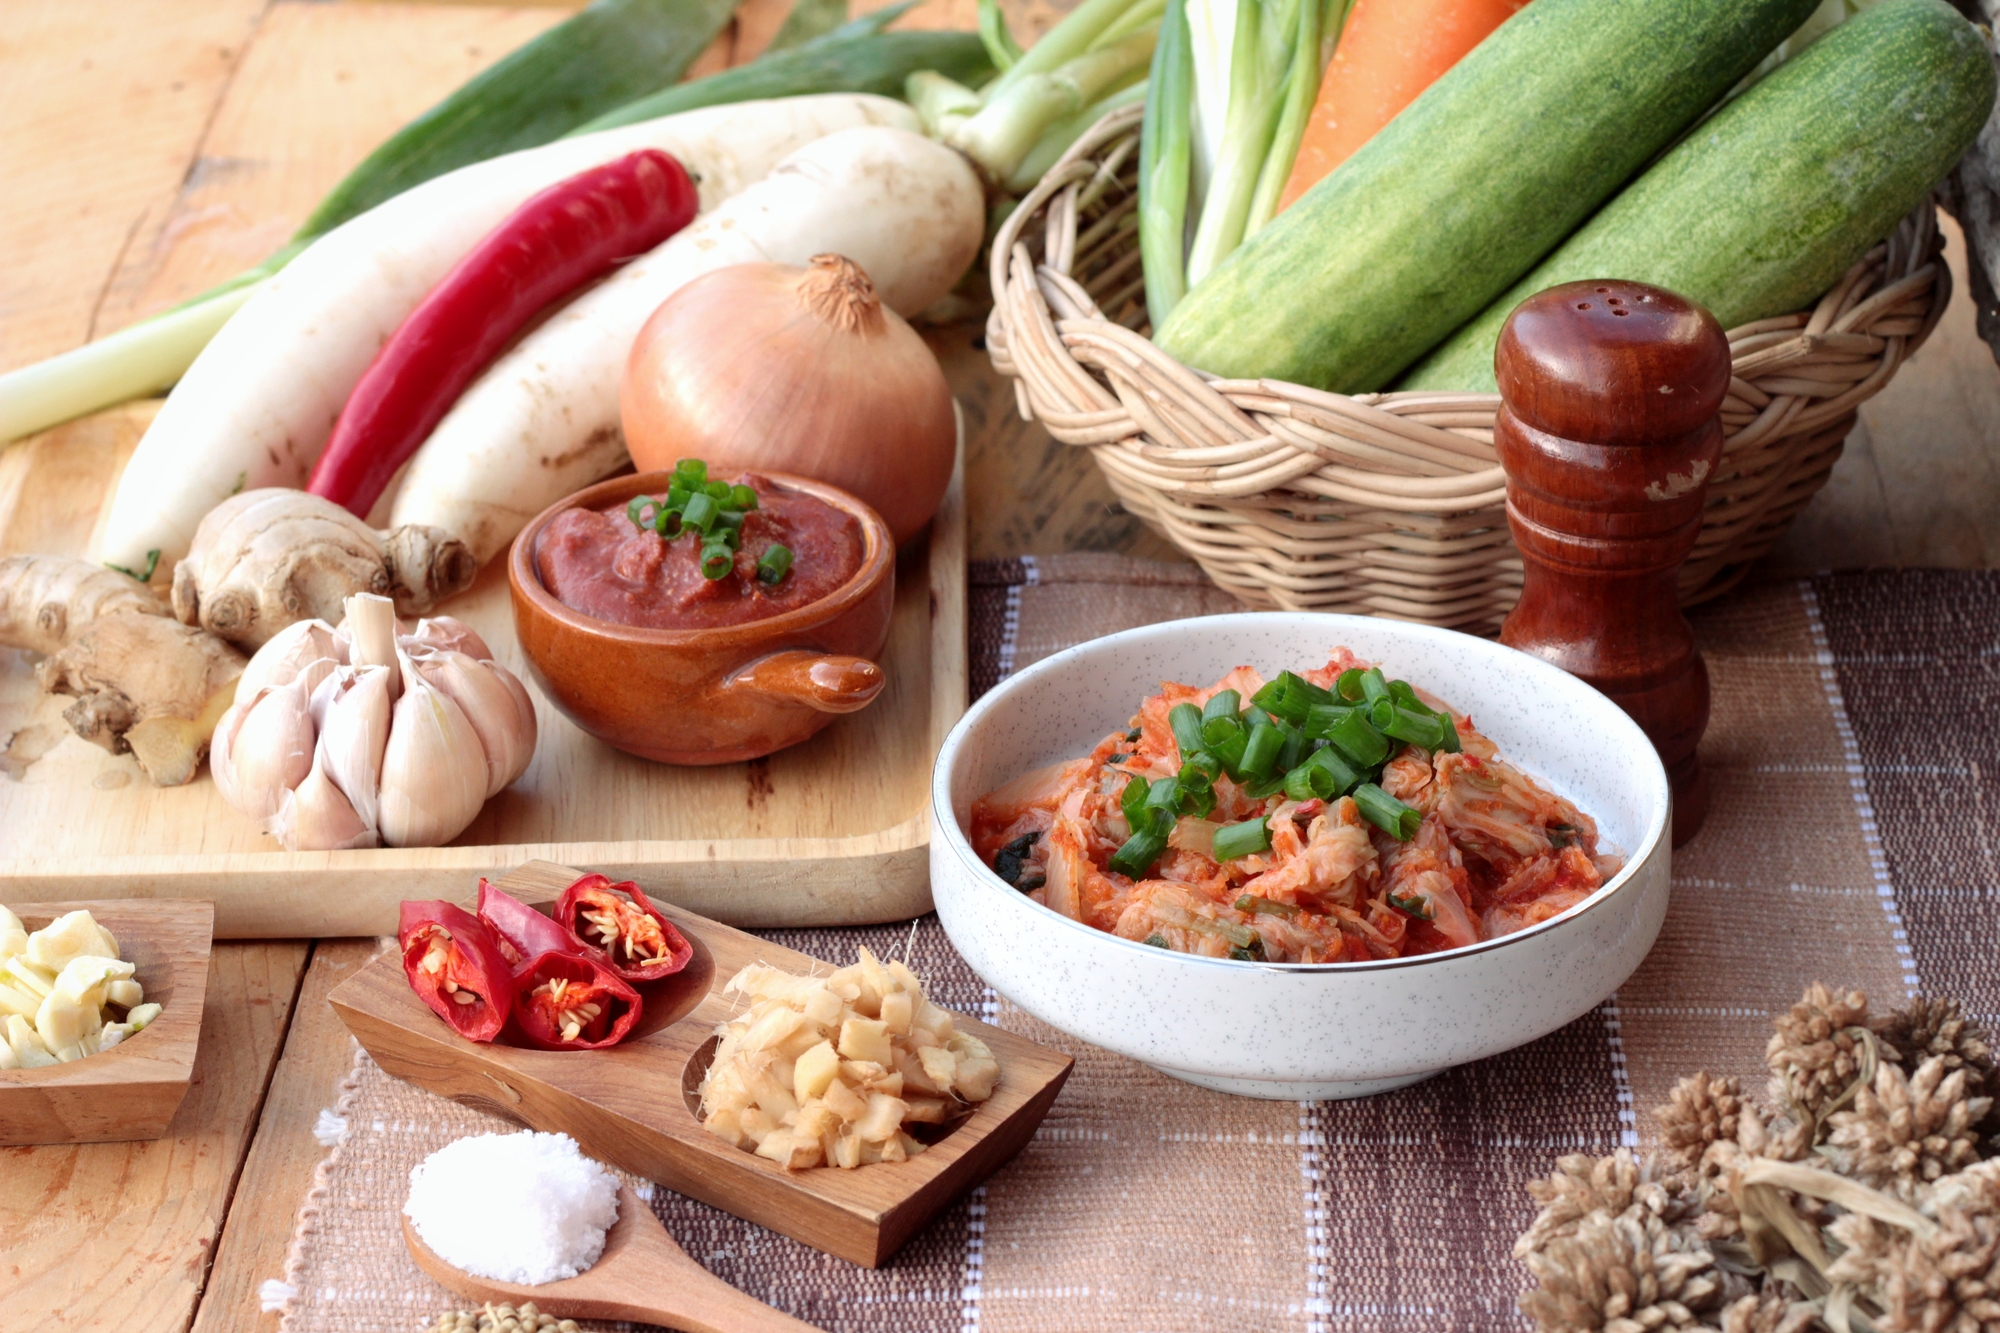 Probiotics and prebiotics on a table, like kimchi and garlic